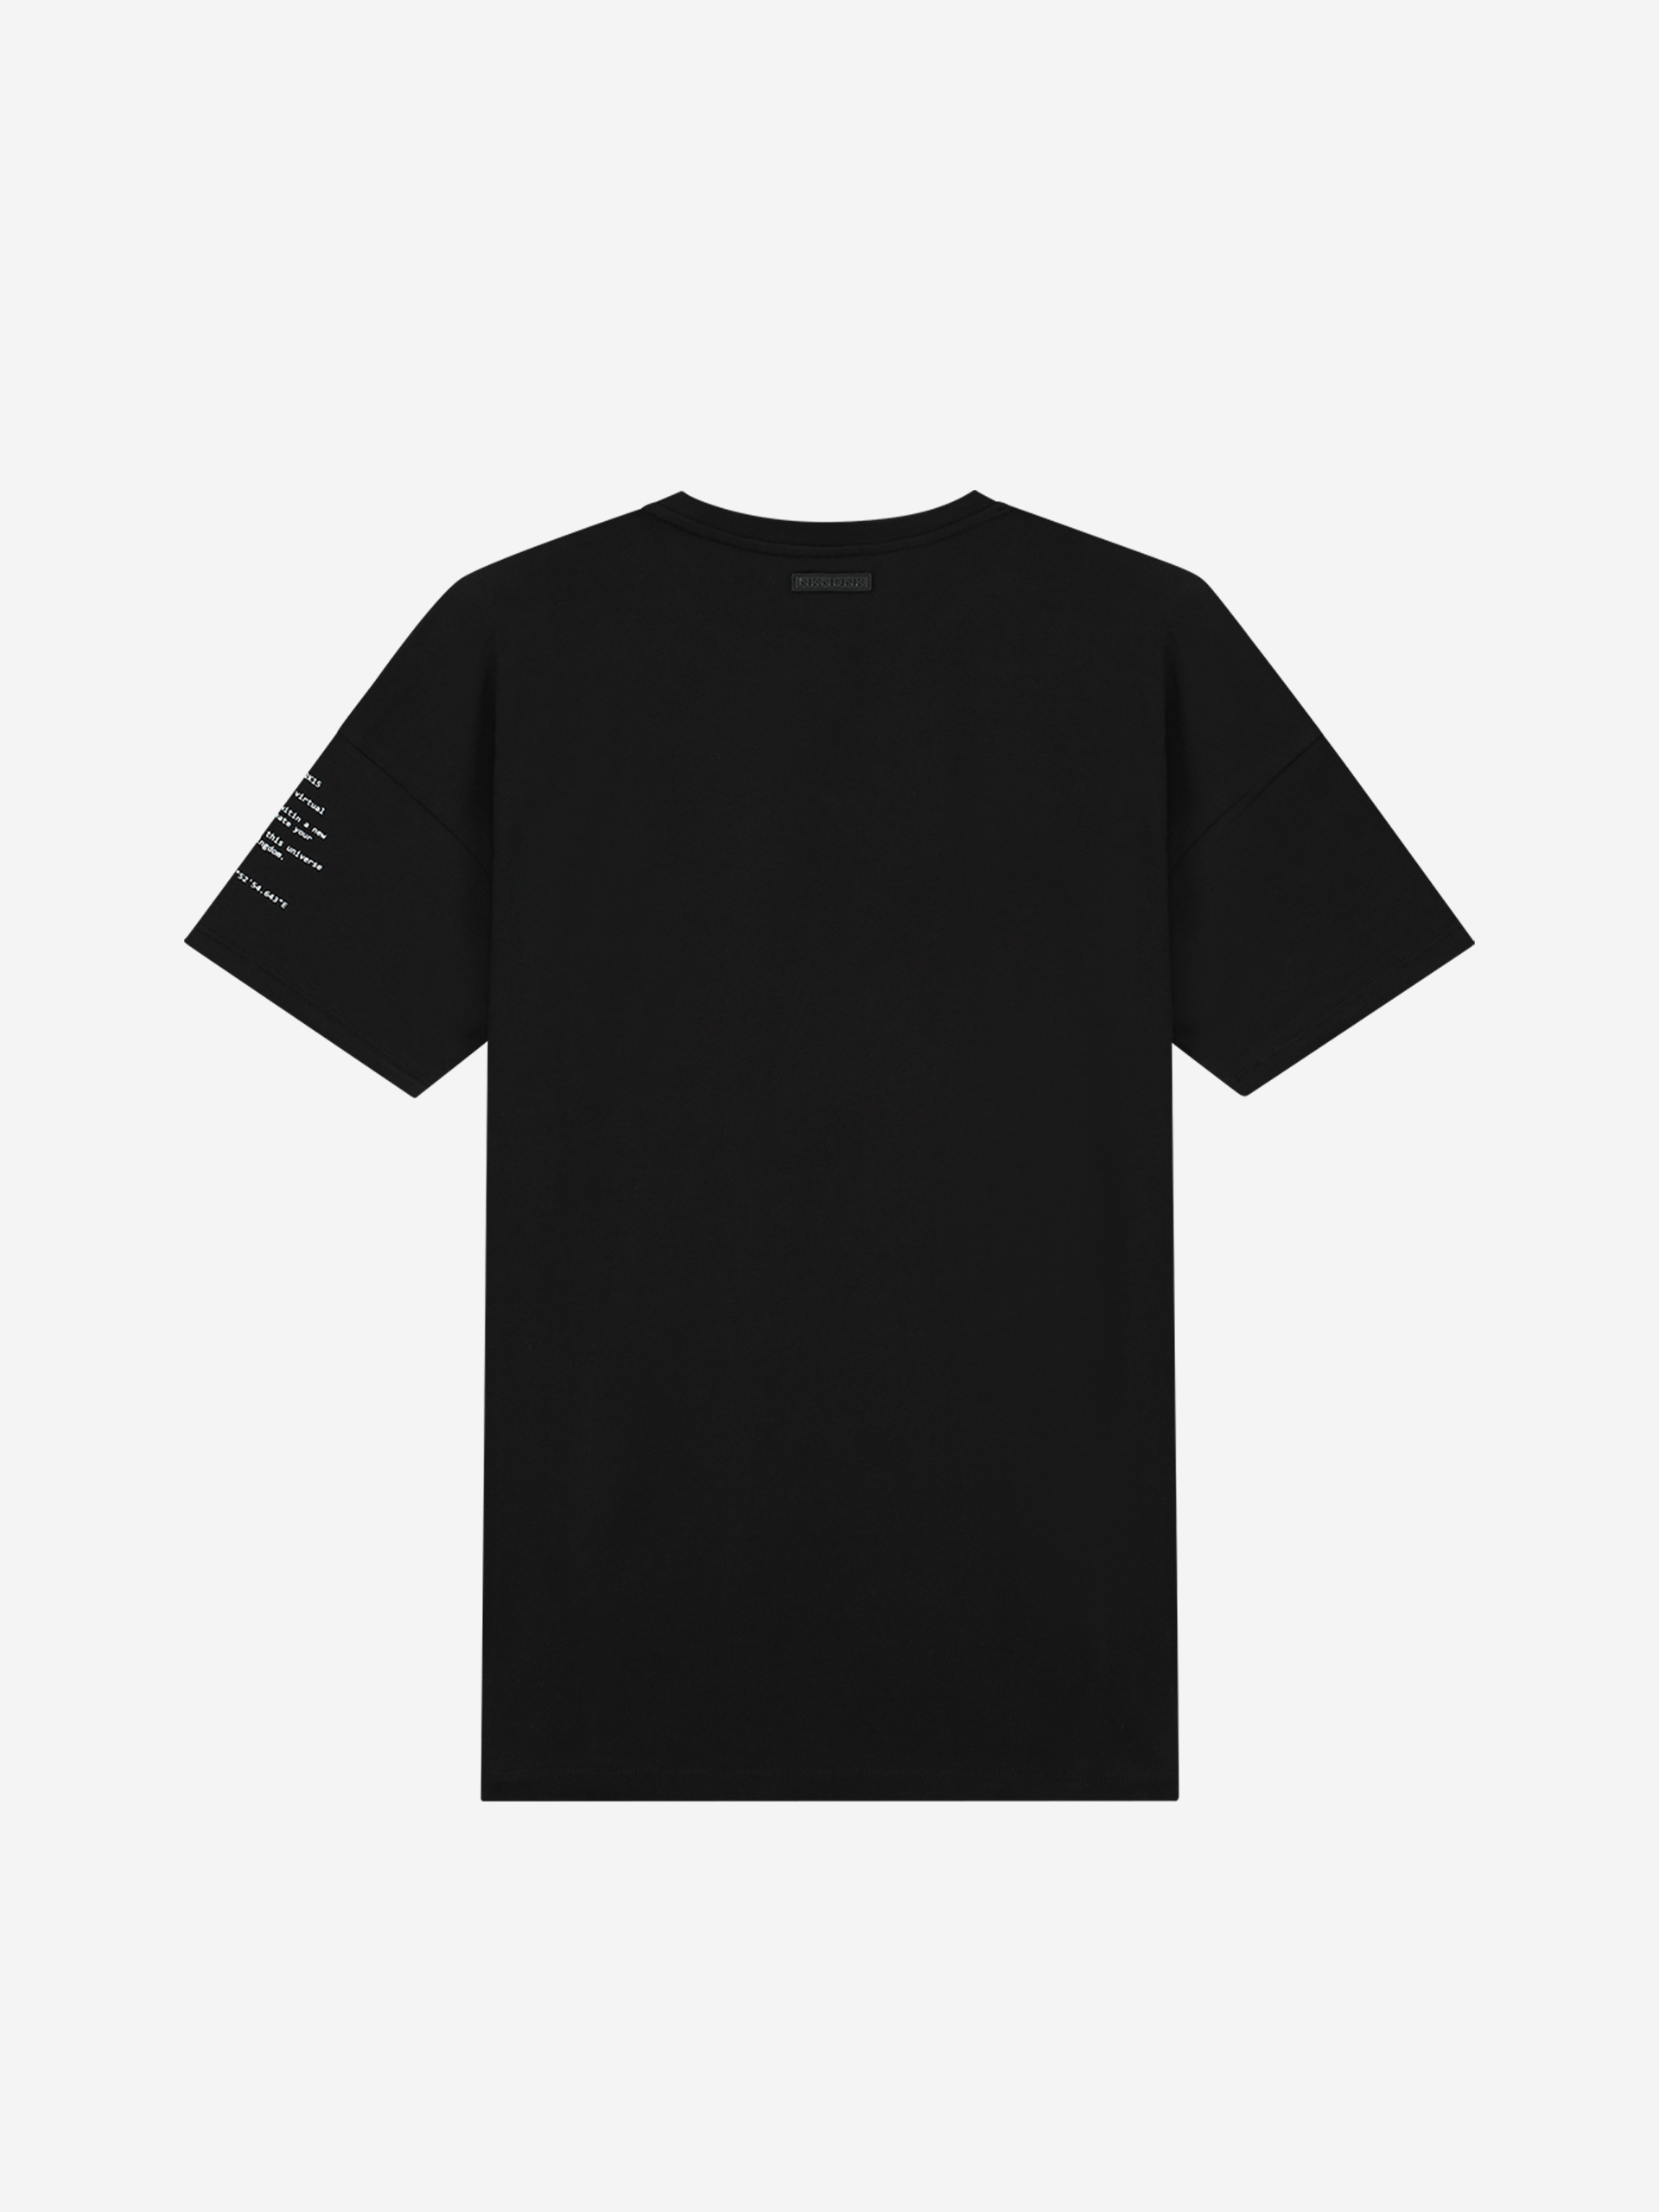 Digital T-Shirt